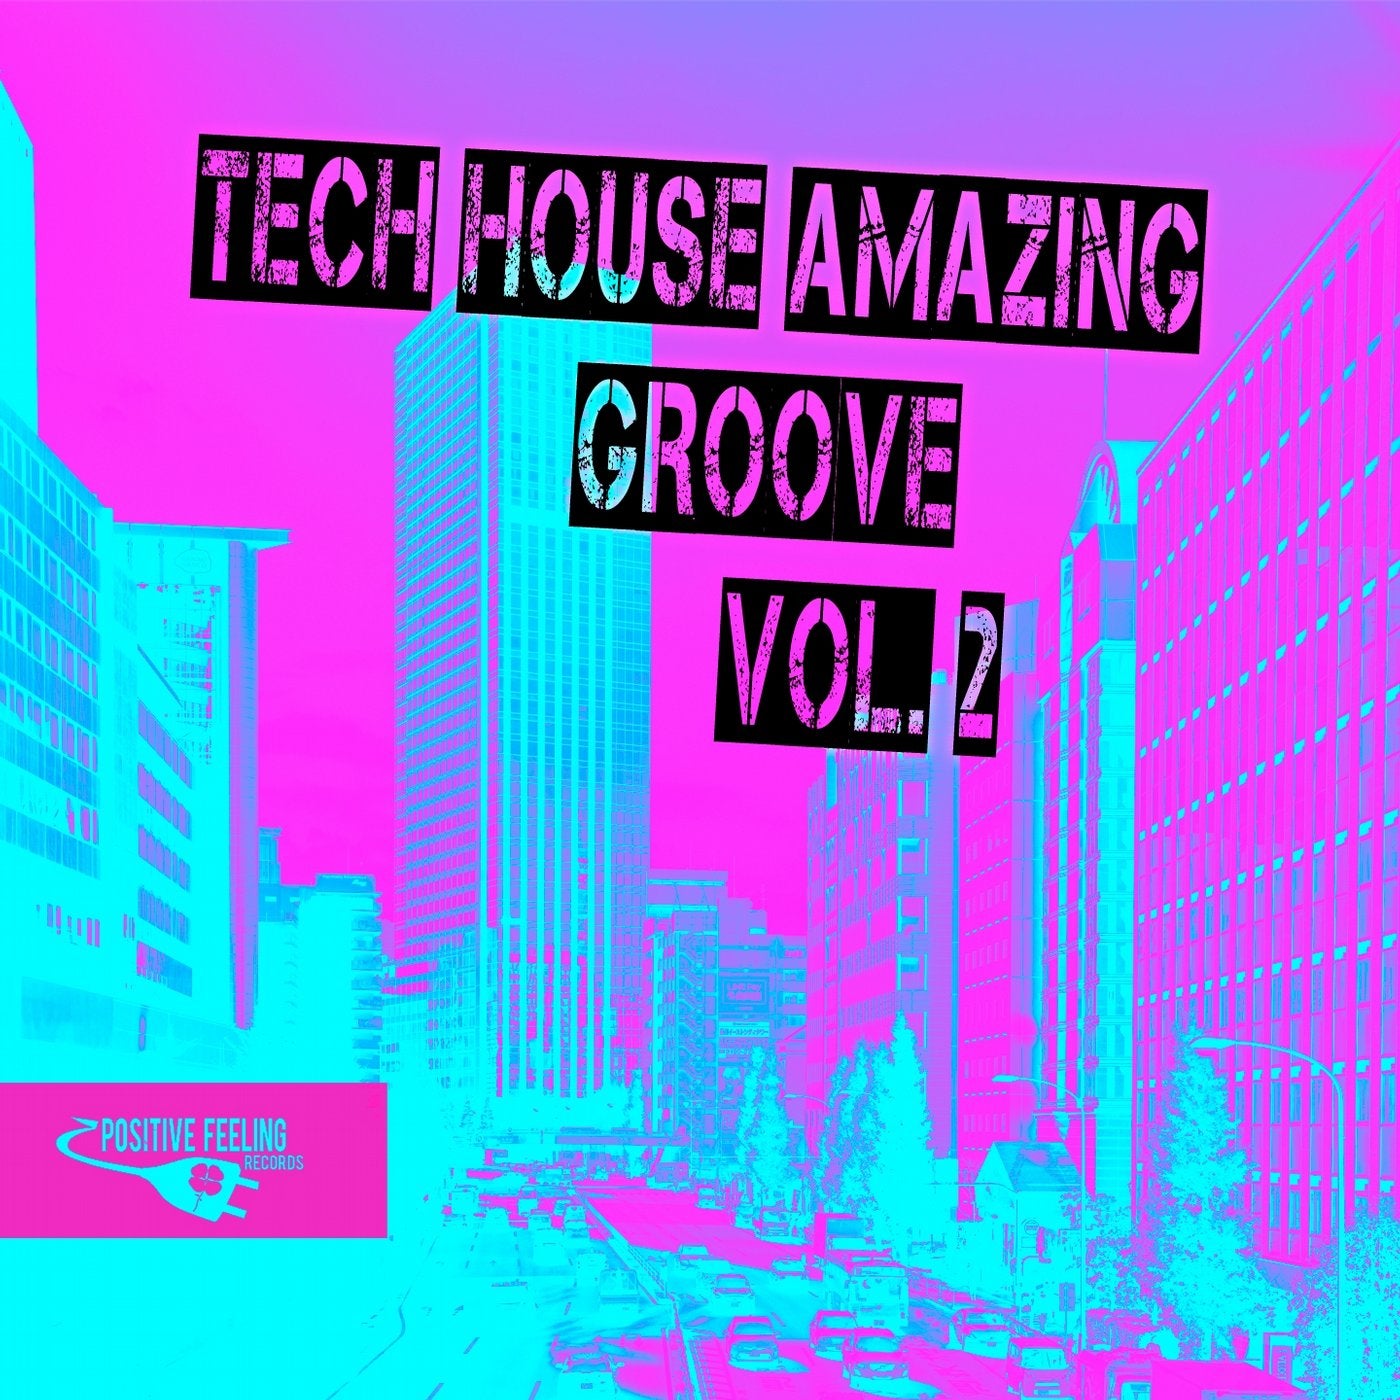 Tech House Amazing Groove, Vol. 2